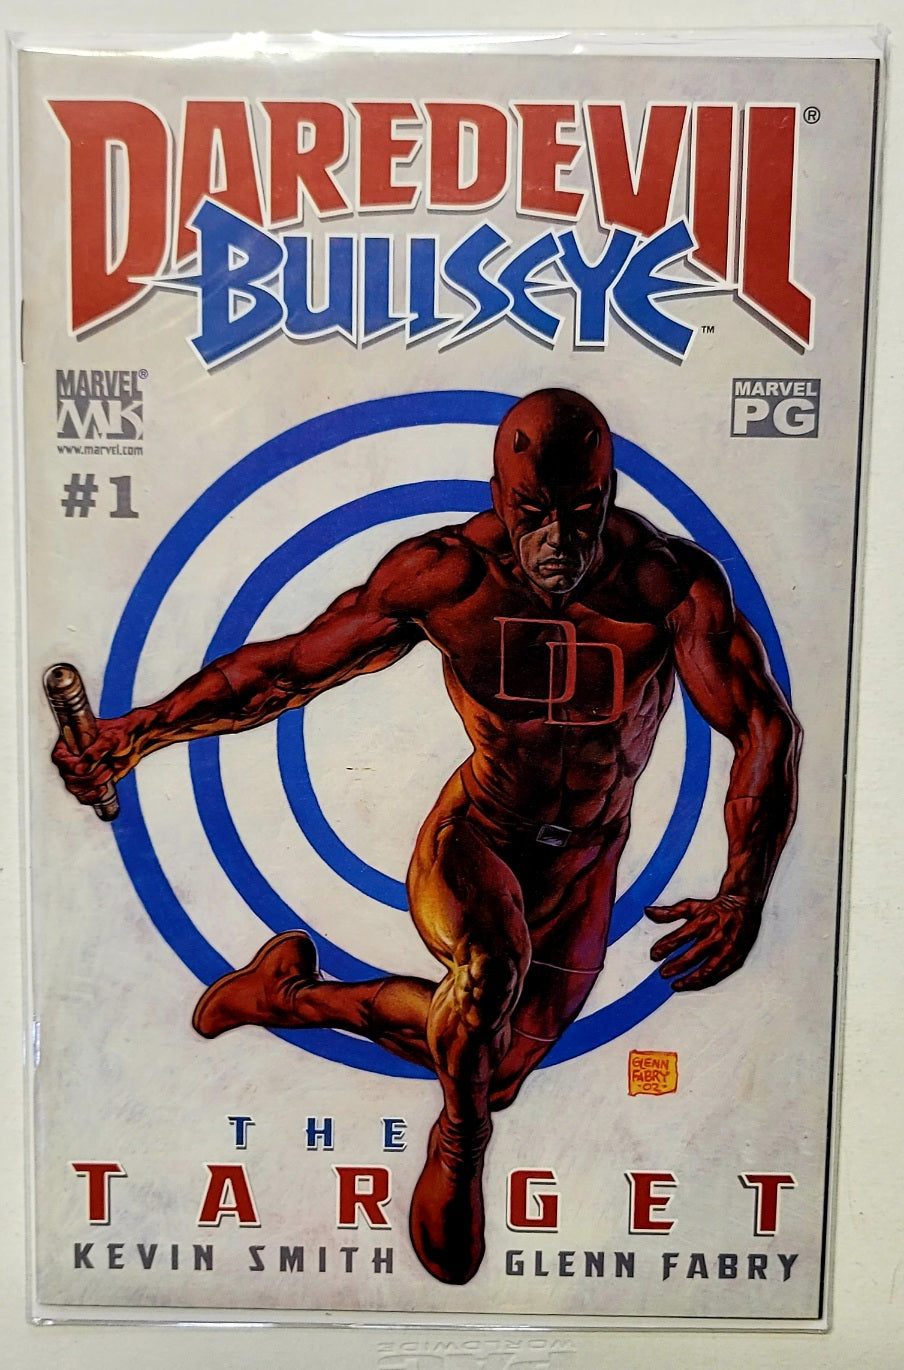 Daredevil the Bullseye - #1 Marvel Comics + Edición digital